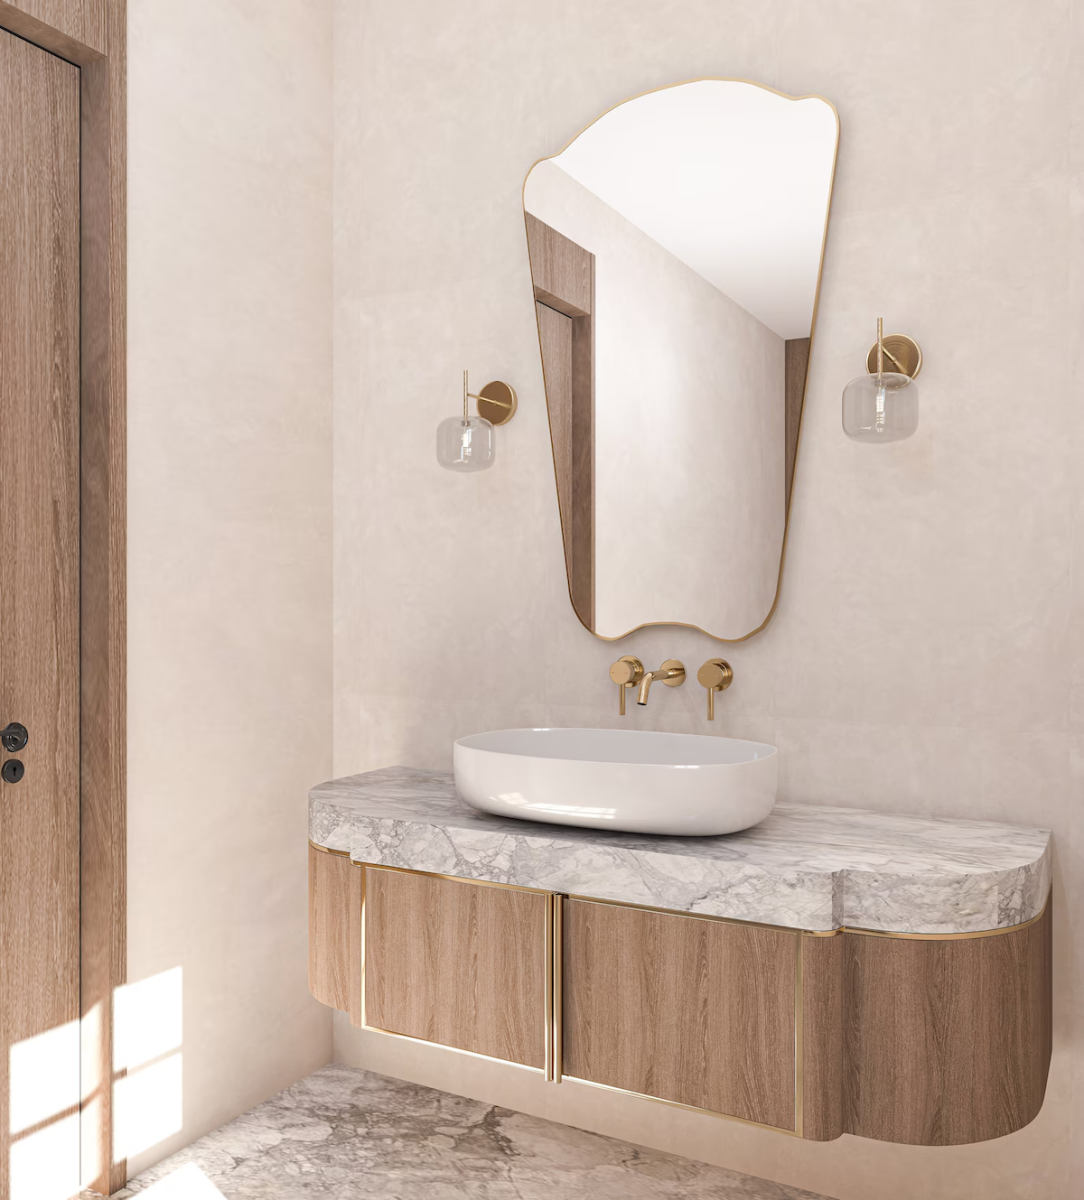 An asymmetrical mirror hangs over a modern floating vanity in a neutral bathroom.